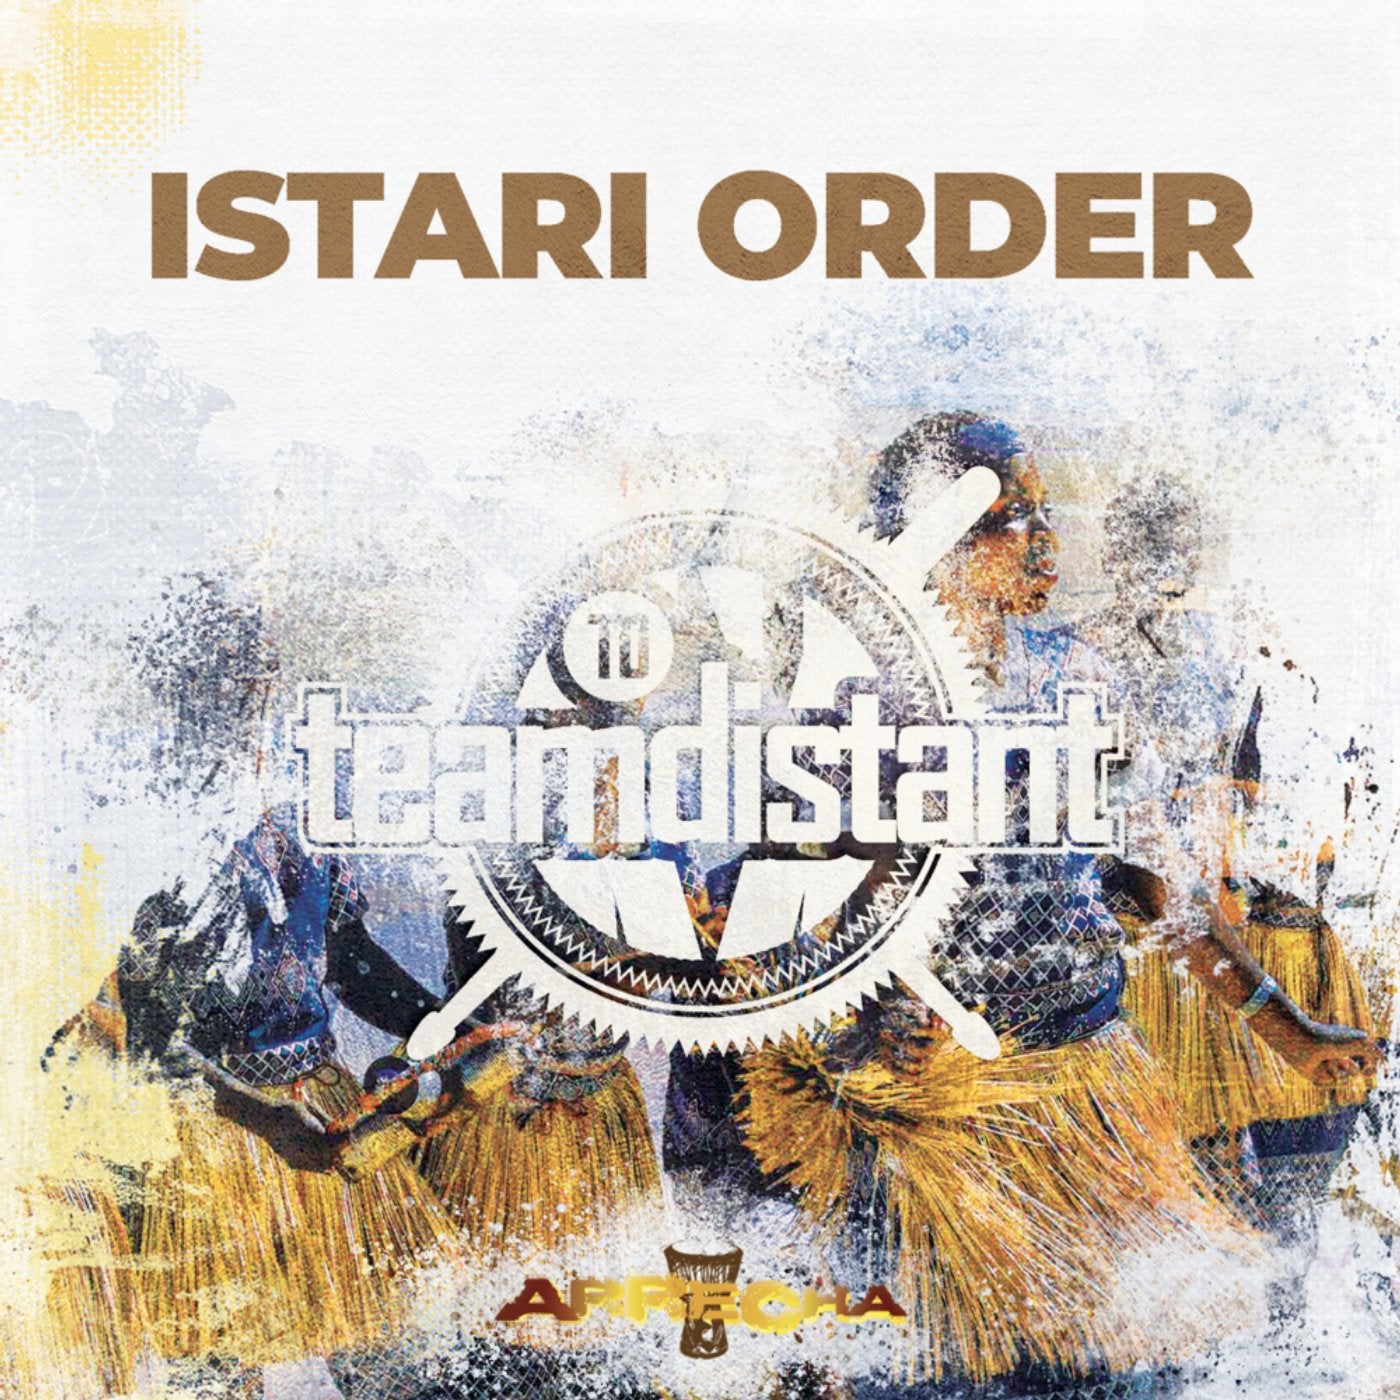 Istari Order